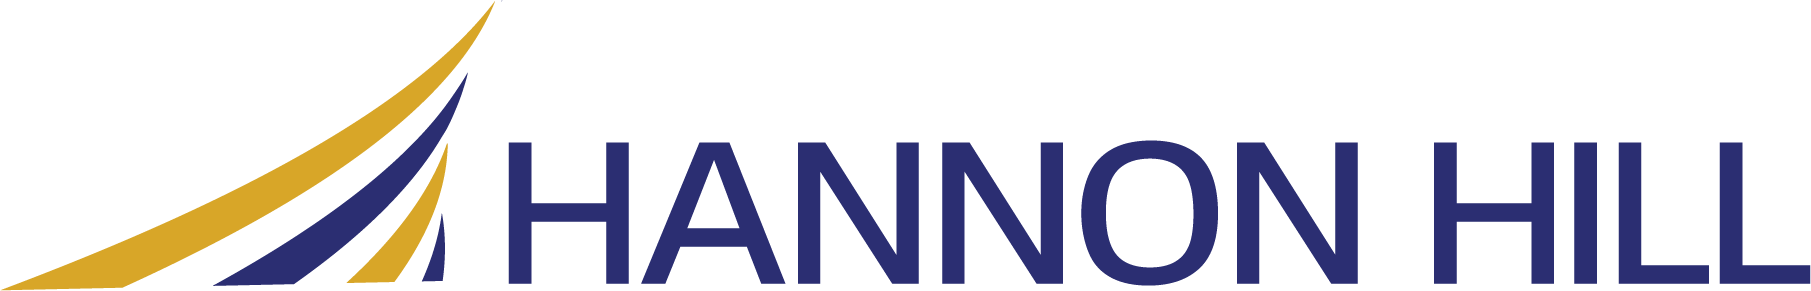 hannon-hill-logo